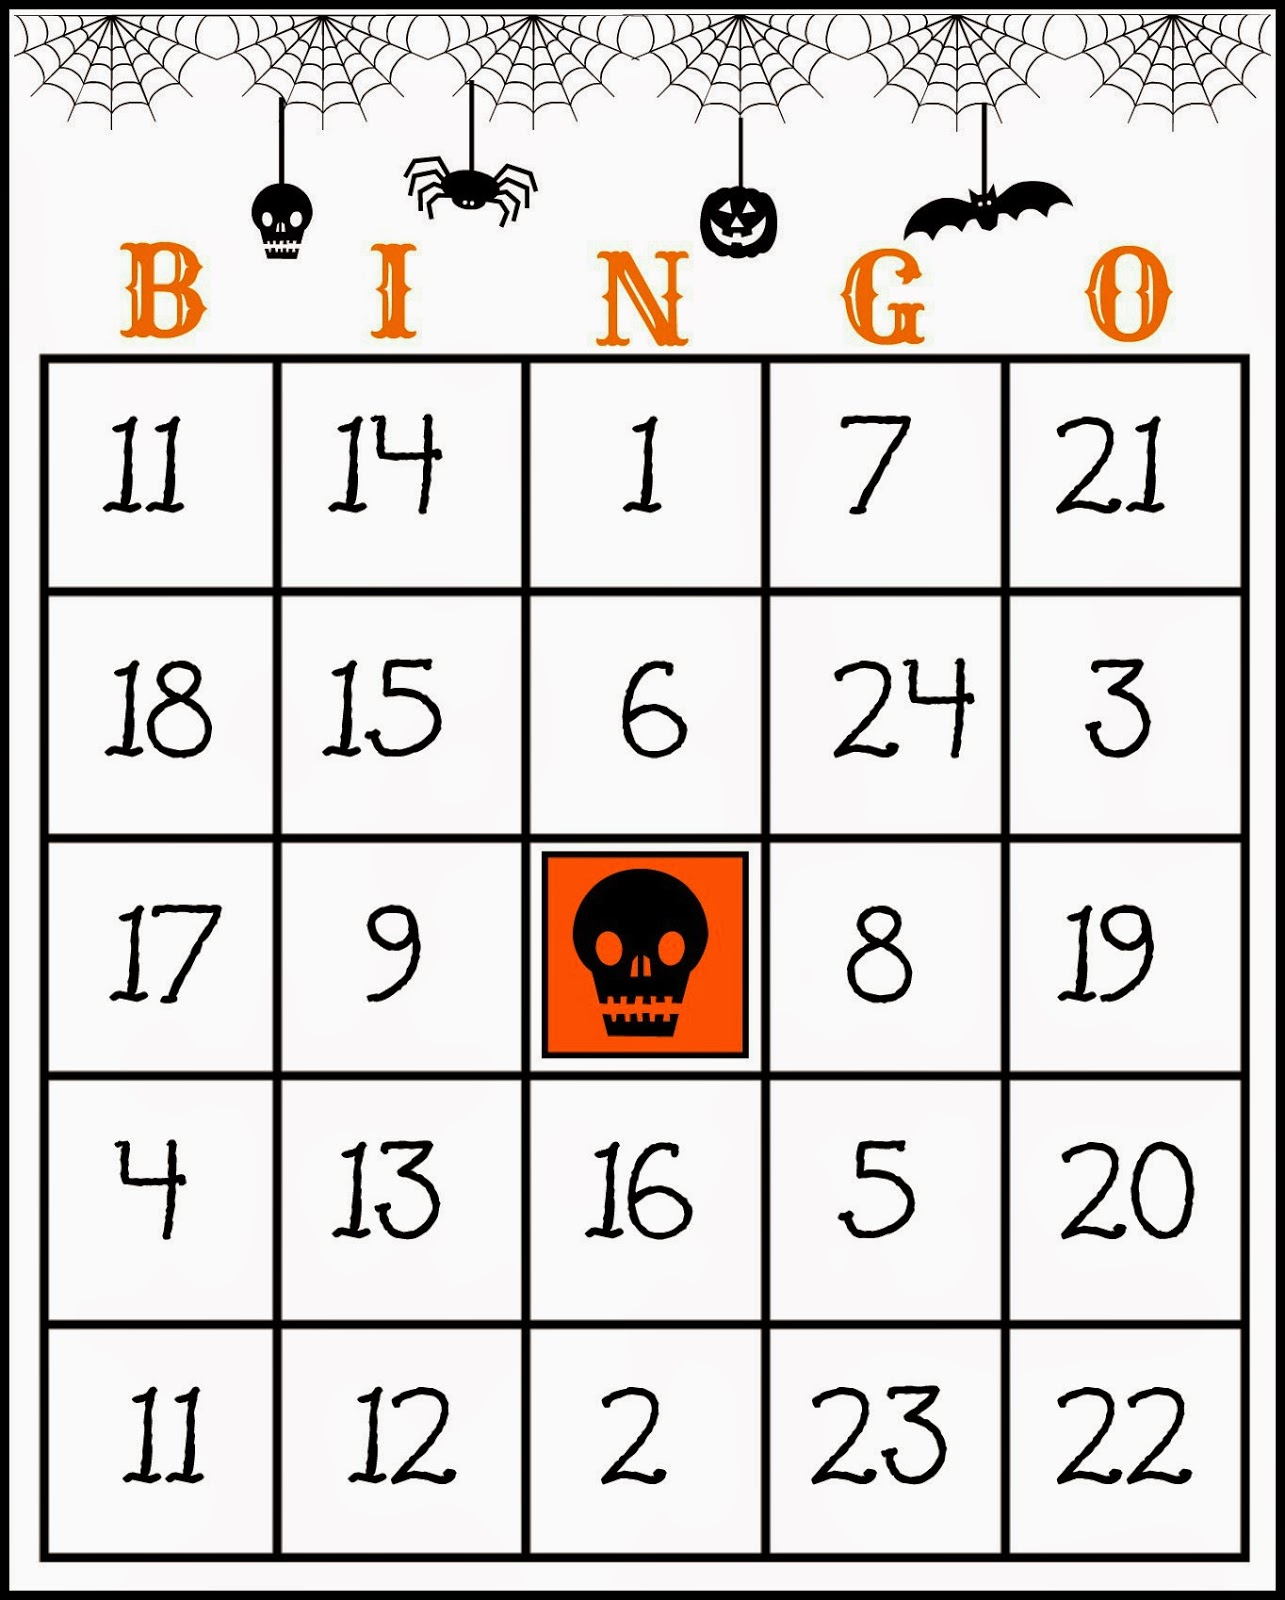 Crafty in Crosby: Free Printable Halloween Bingo Game